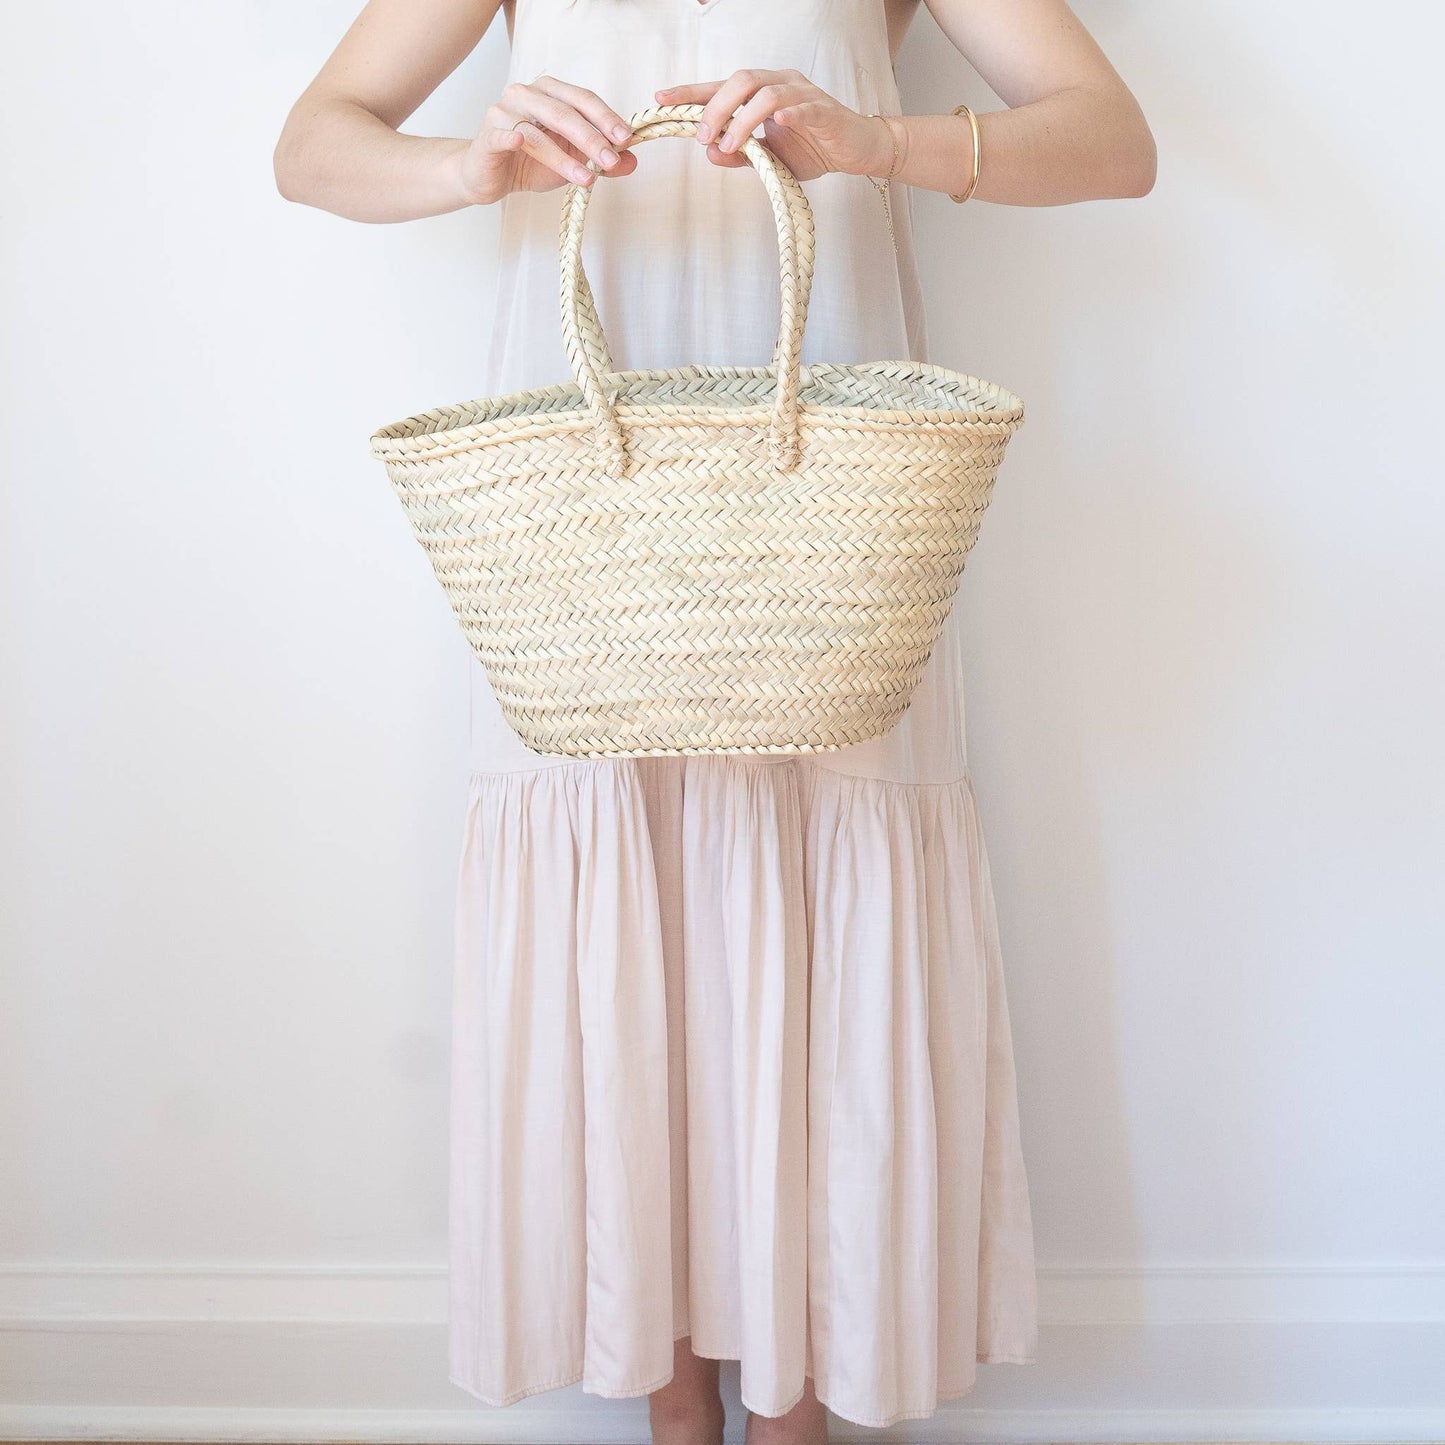 SOCCO Designs - AUGUSTA French Basket Medium - Straw Bag with long handles